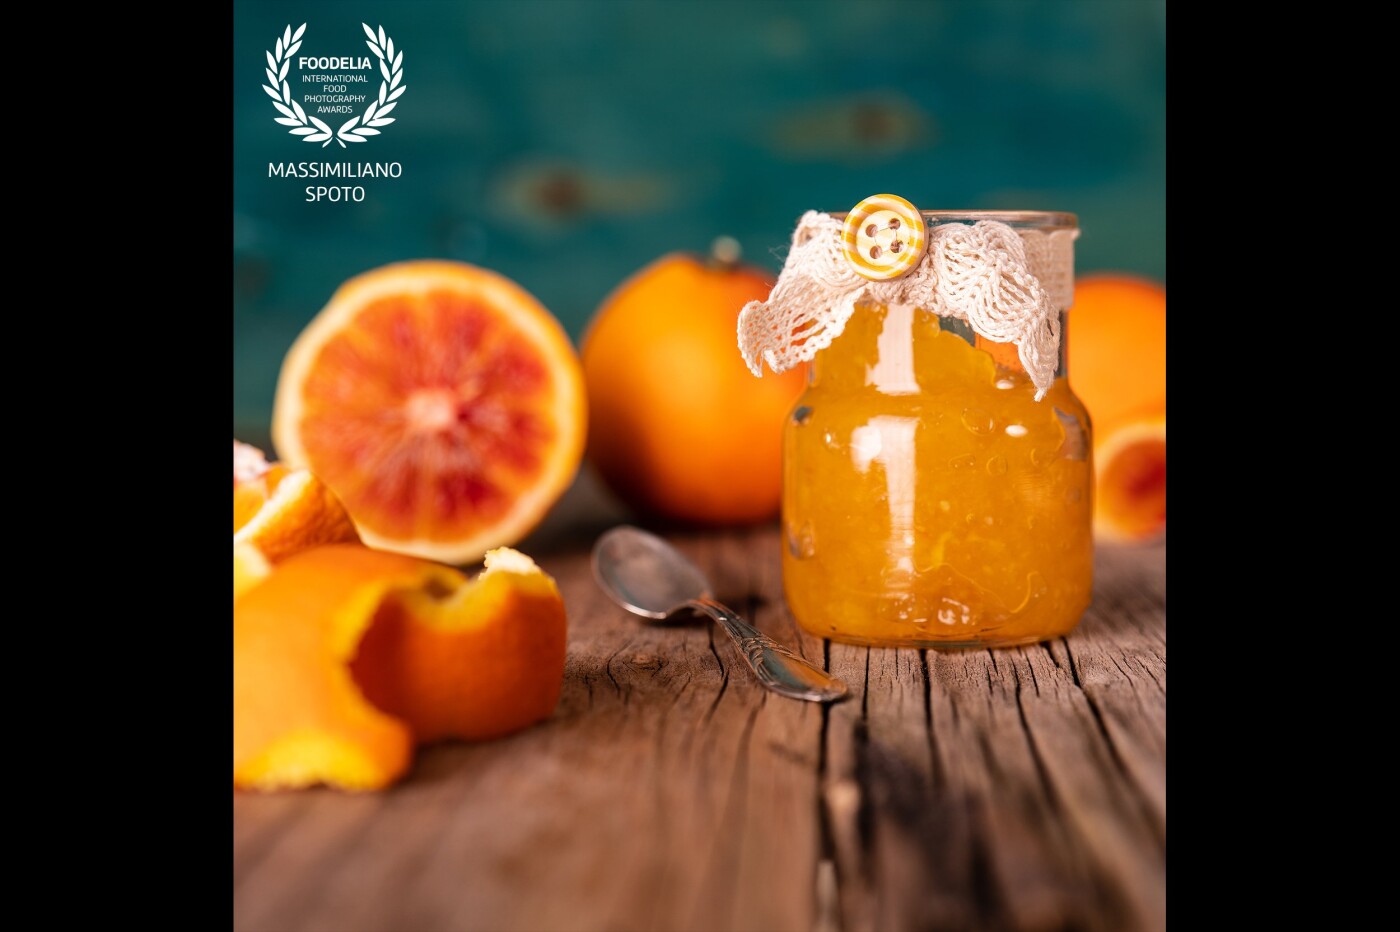 Theme: Sicilian Blood oranges jam<br />
Camera: Sony Alpha A7RII<br />
Lens: Sony 50 mm macro<br />
Flash: Elinchrom with a softbox<br />
Settings: ISO 50, 1/125 sec at f/4 with a tripod<br />
Shot in my studio<br />
Food Stylist: Stefania Di Fato (@stefaniadifato on Instagram)